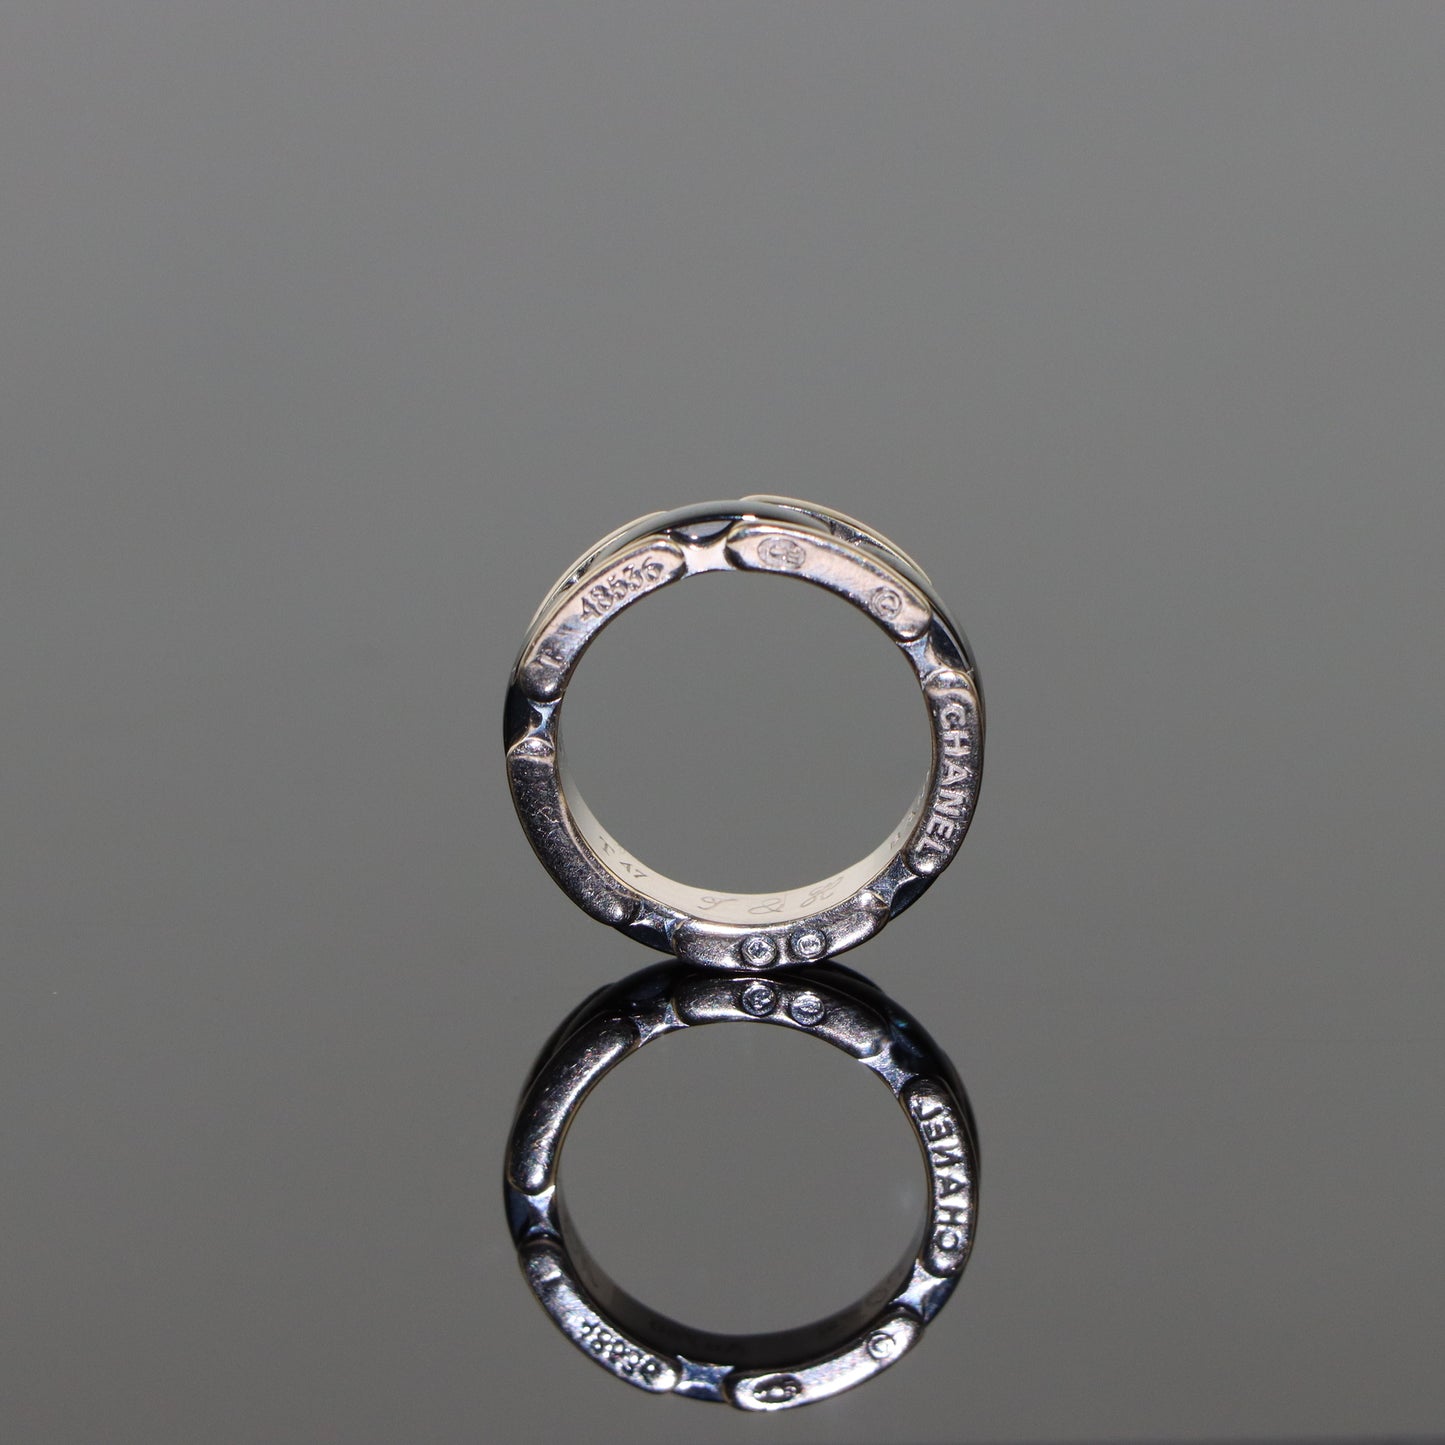 Chanel & Baumer Collaboration 18K White Gold Black Ceramic Ultra Ring